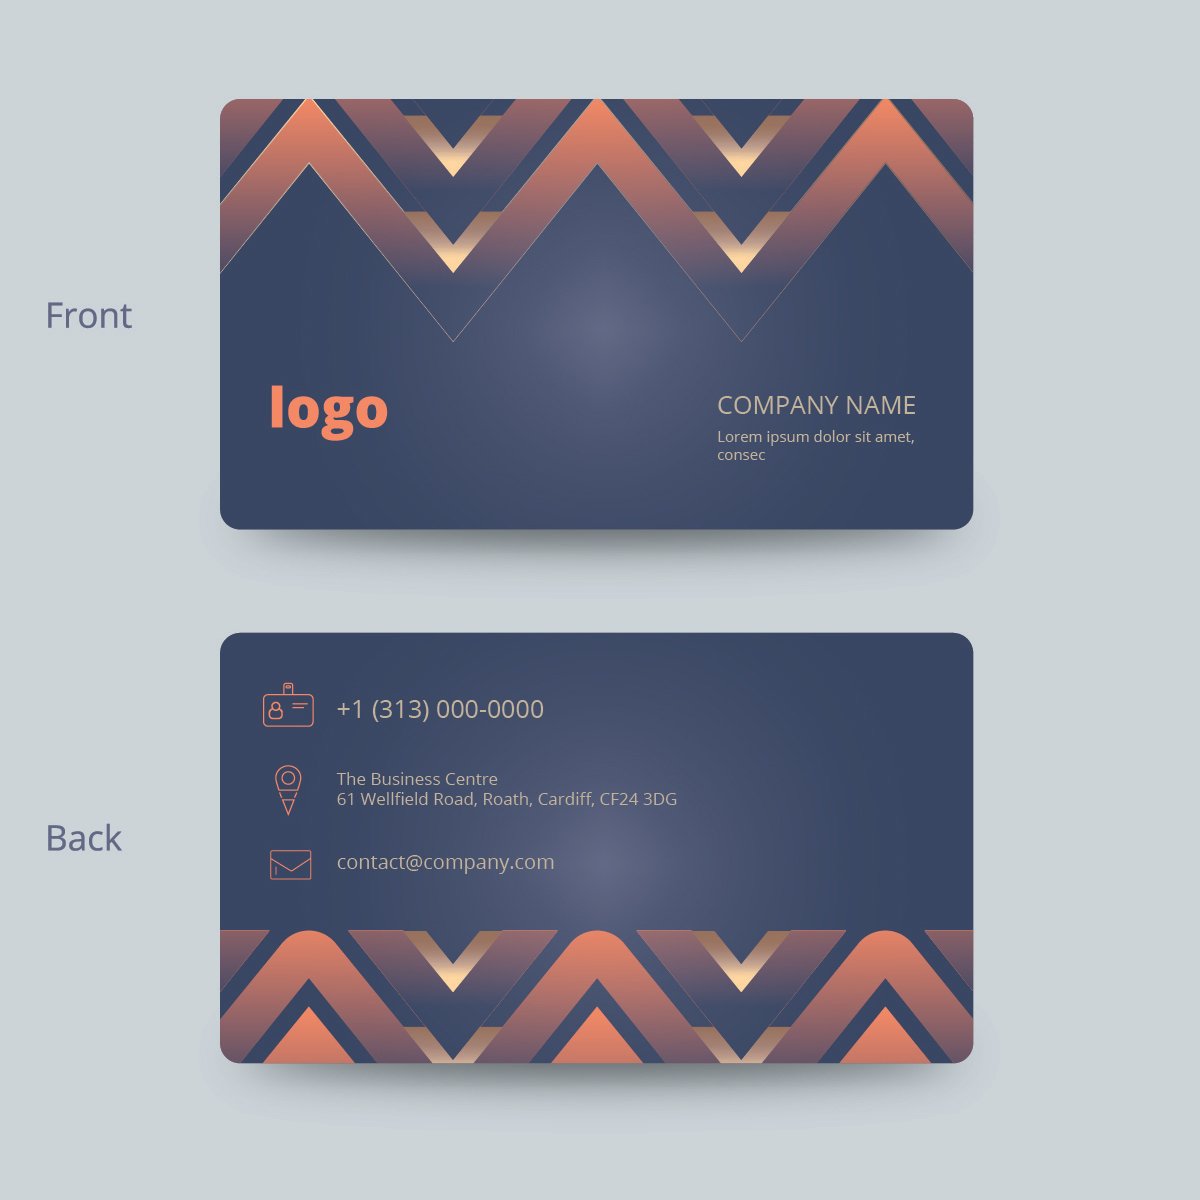 Dark Business Card Design